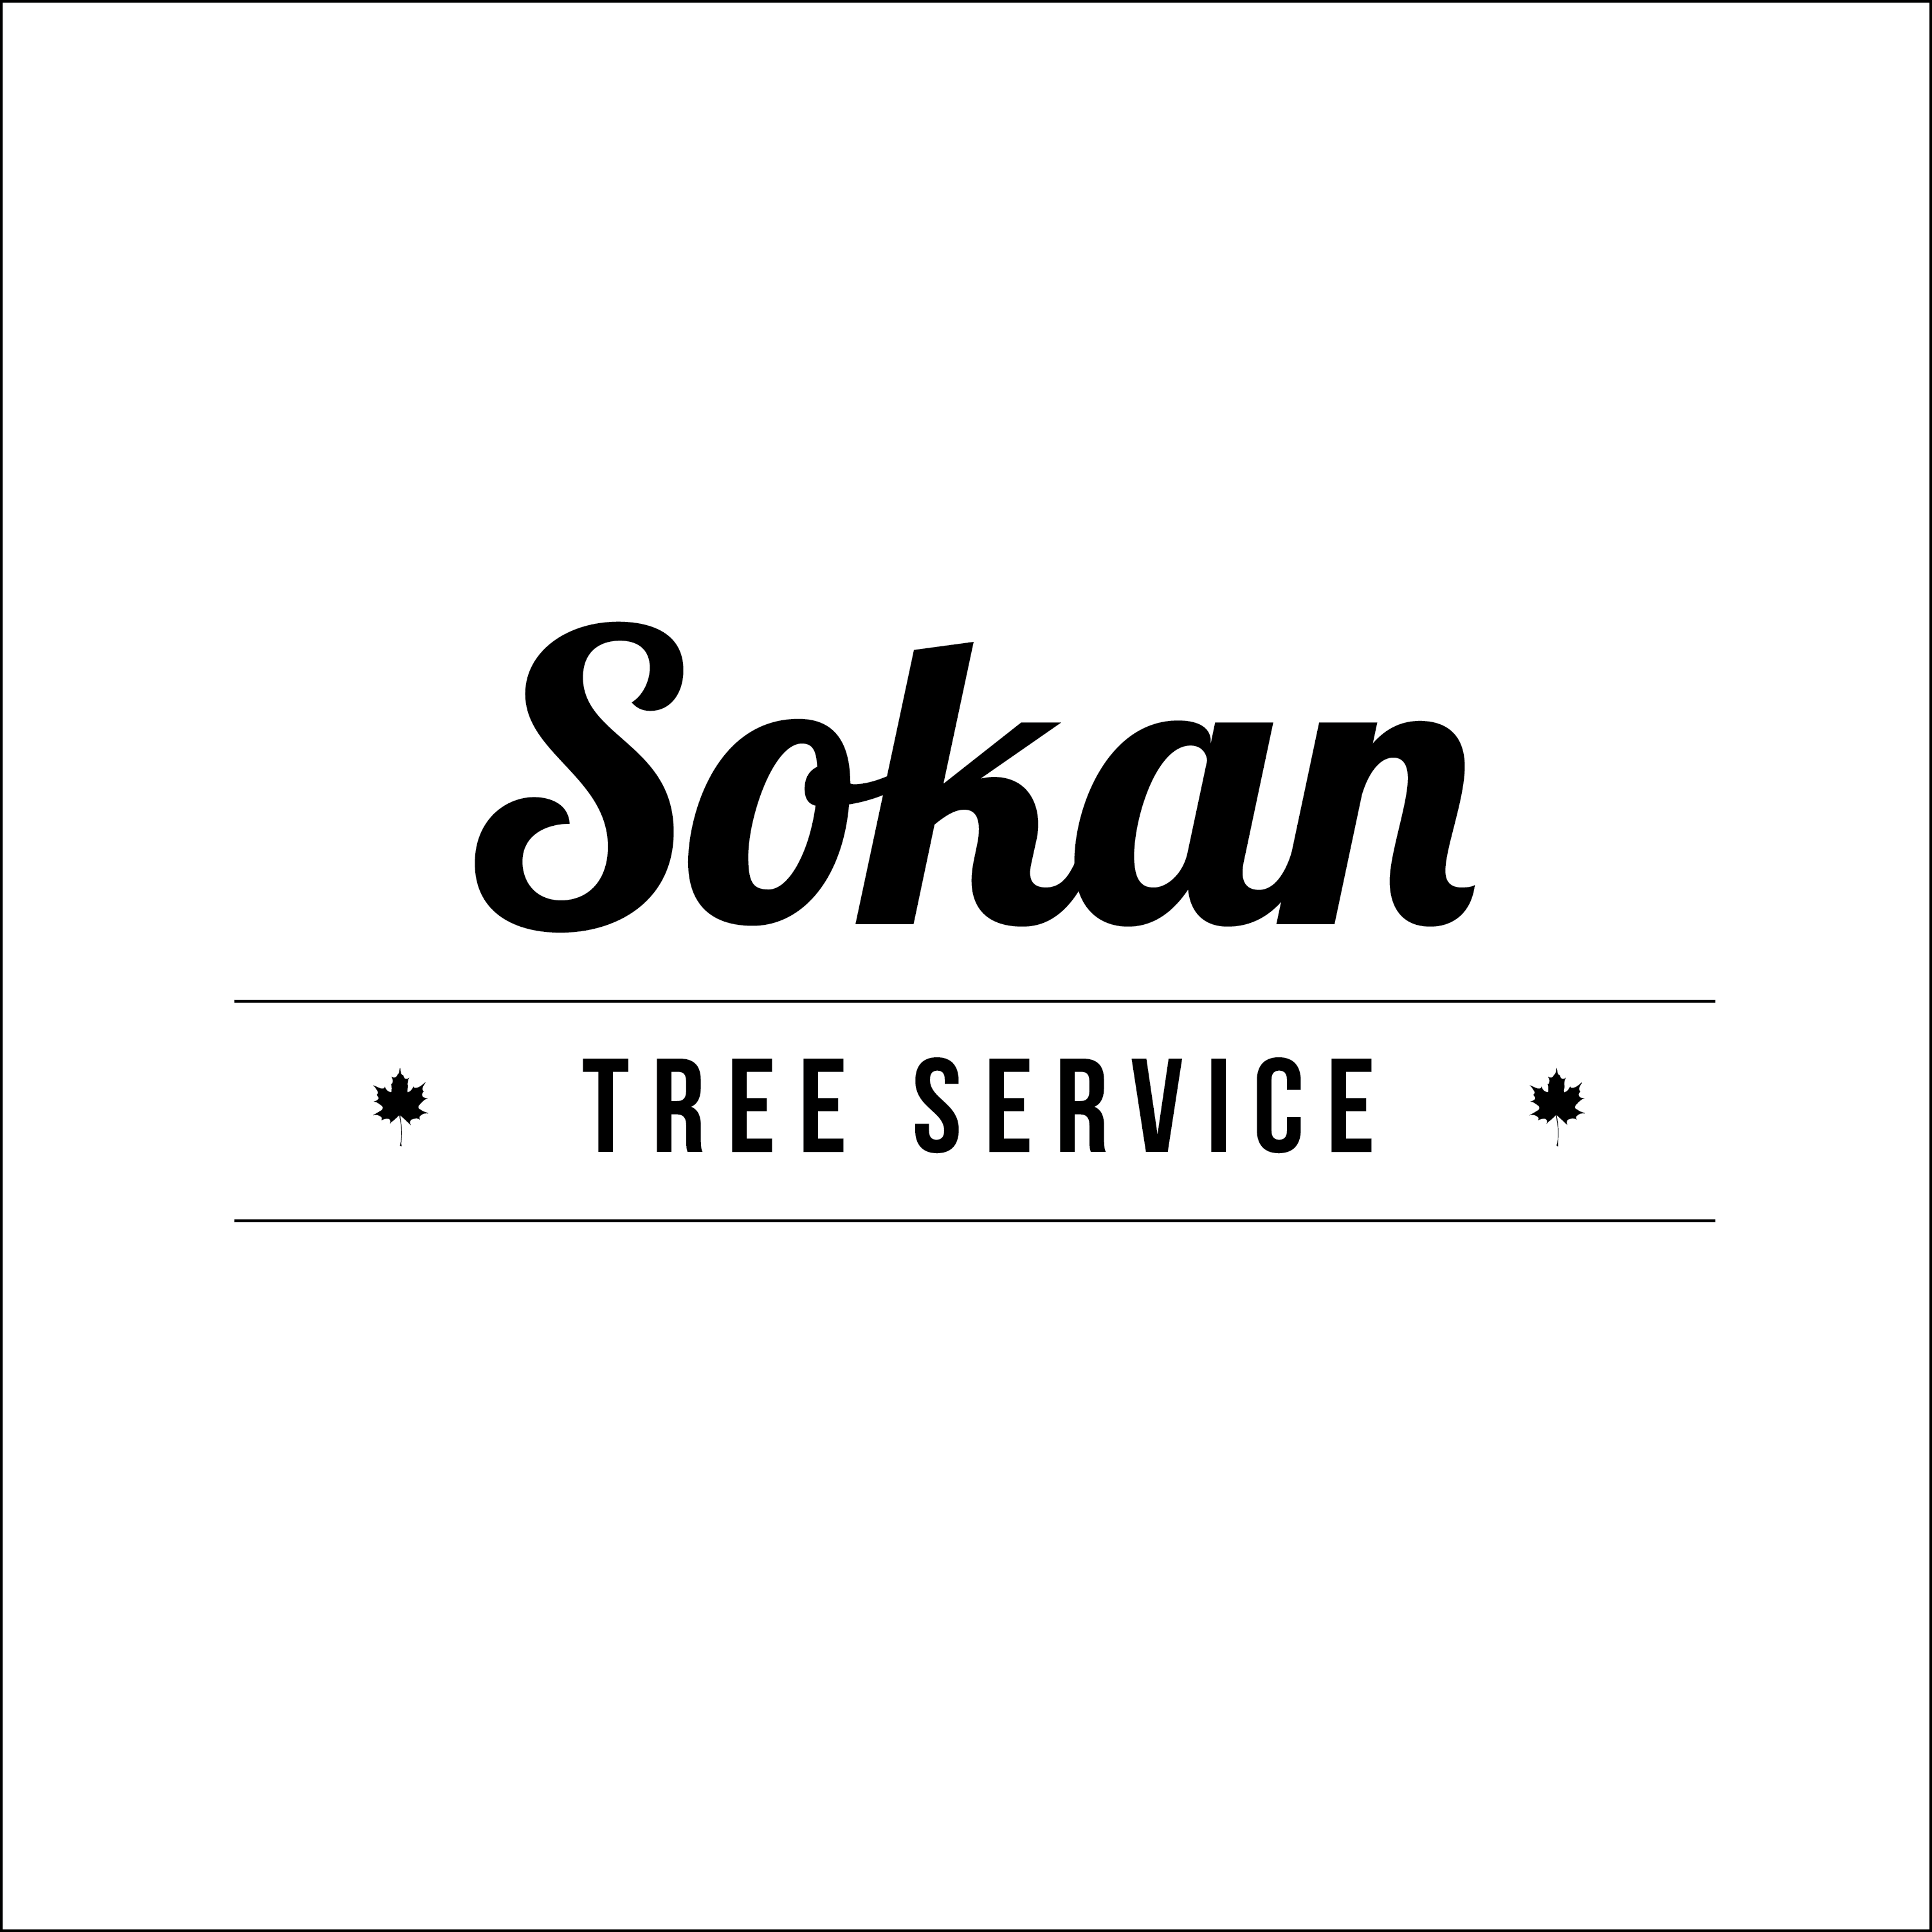 Sokan Tree Service